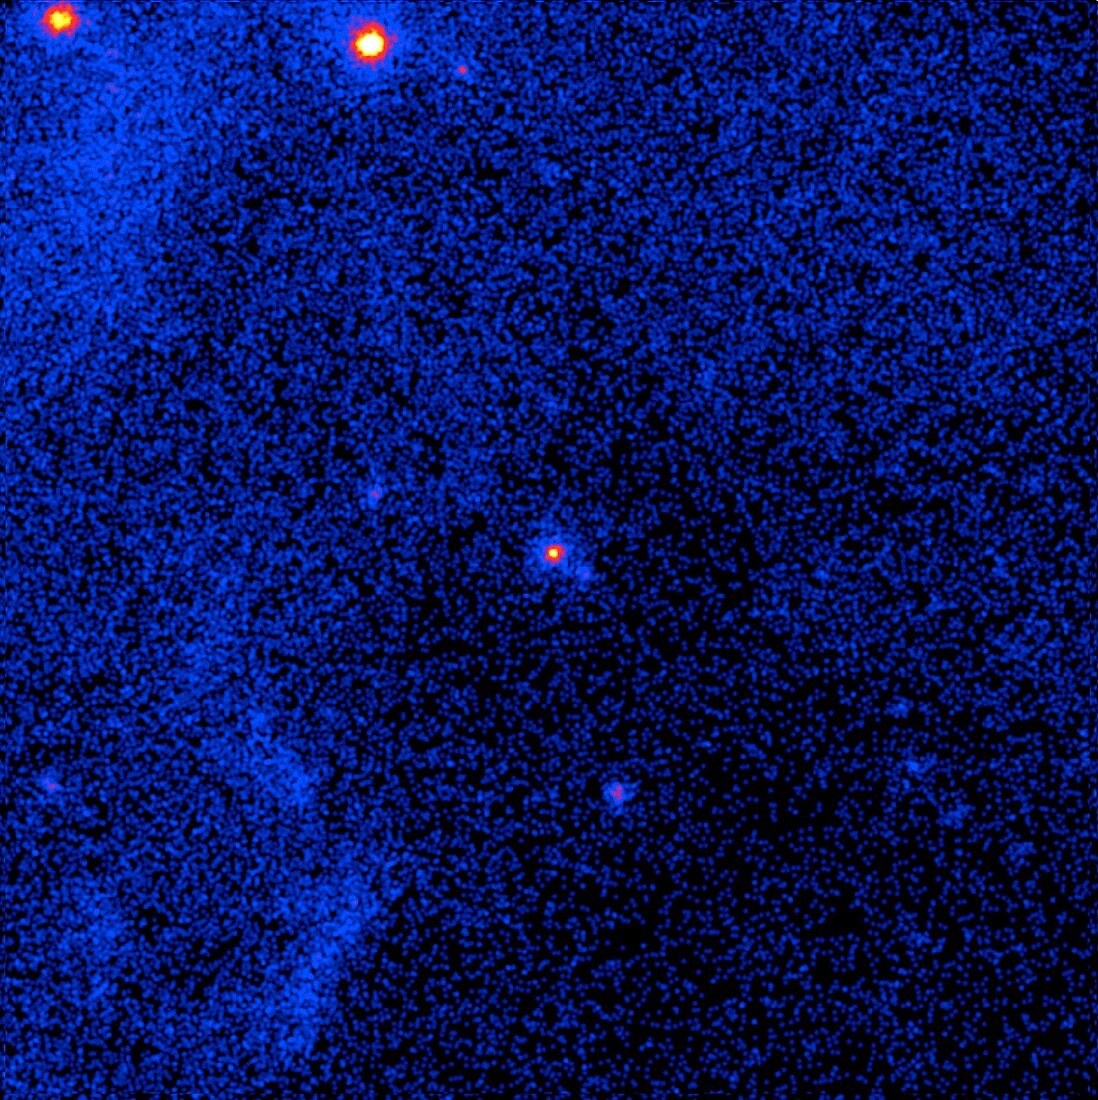 Blazar gamma ray activity,FGST image